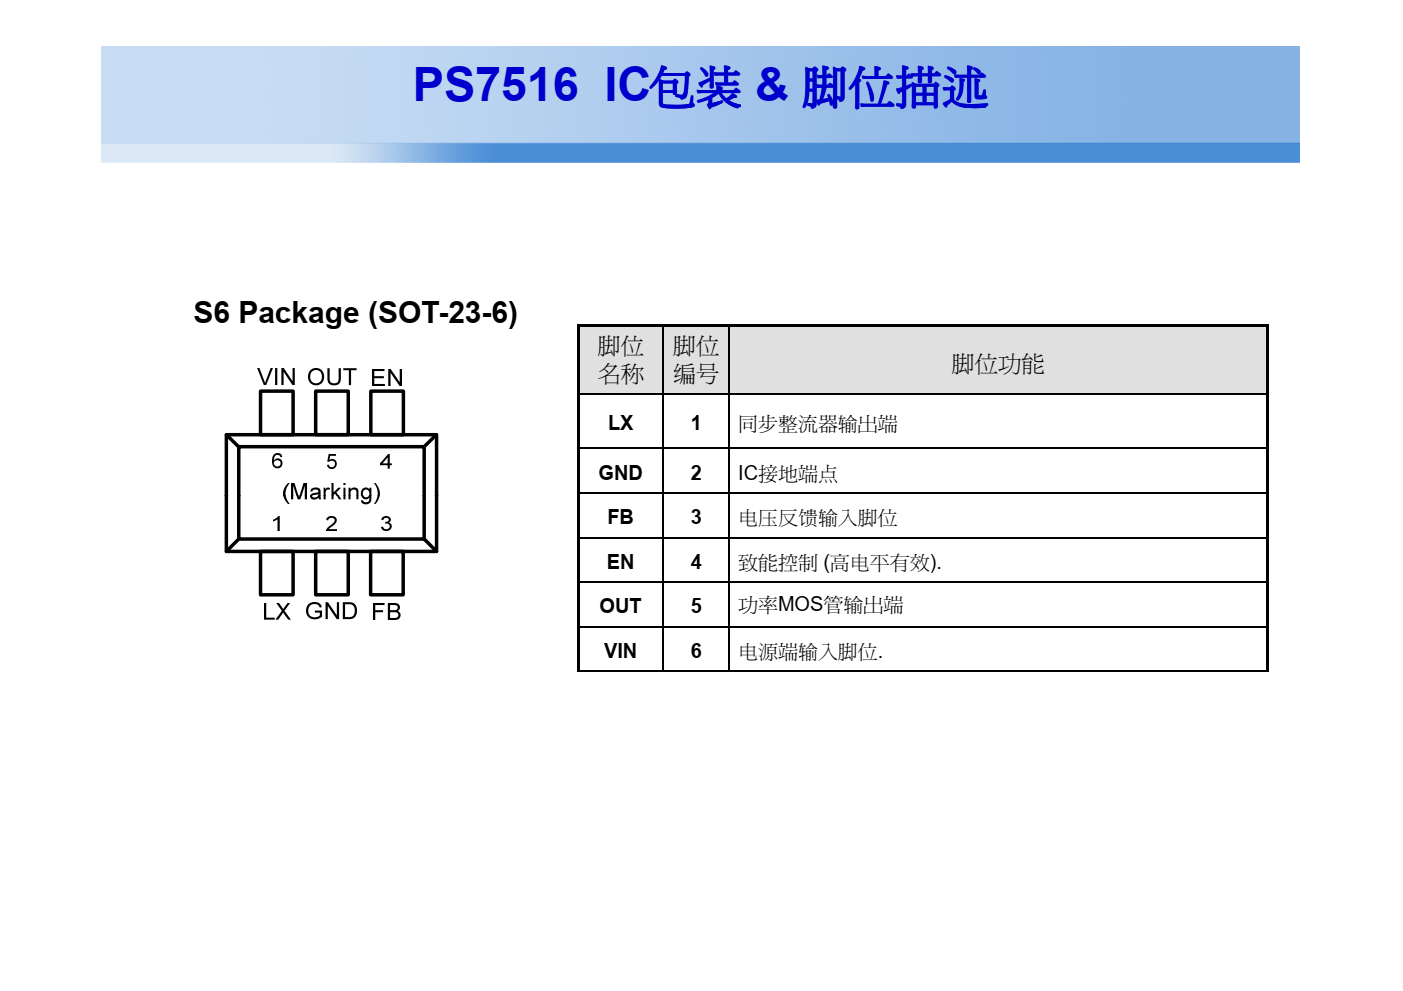 PS7516升压型转换器